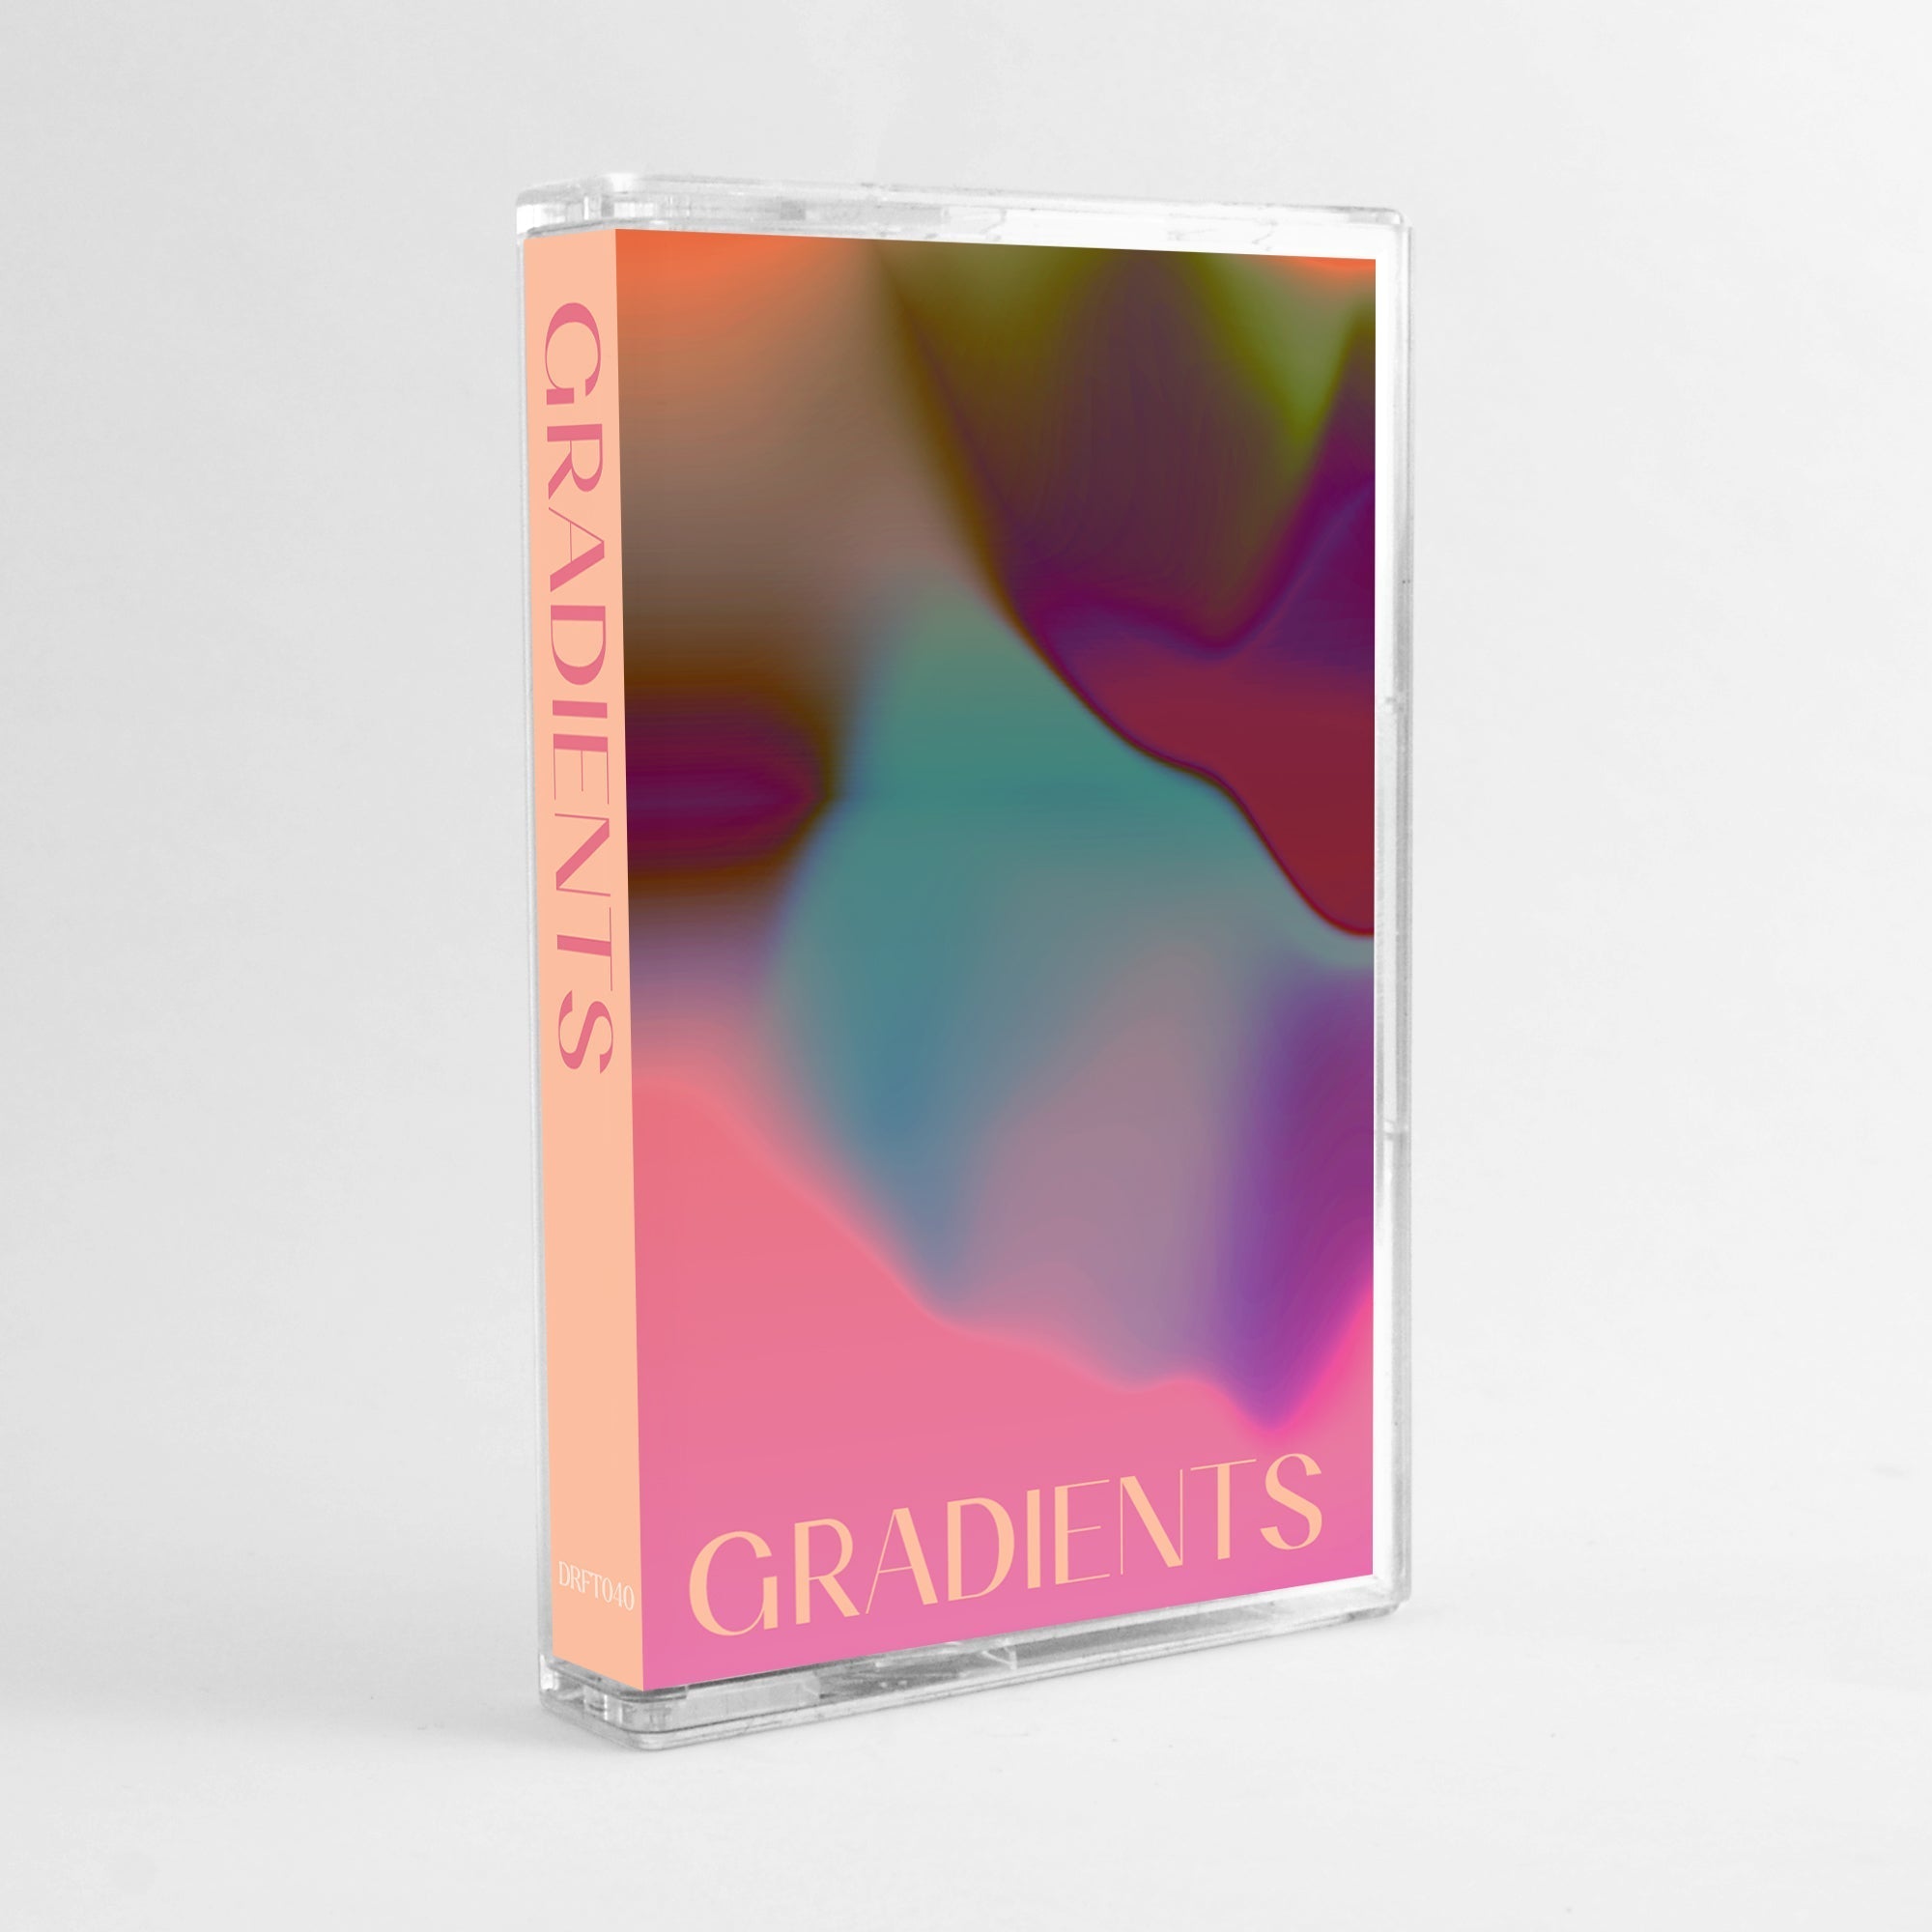 Gradients - Inner Ocean Records